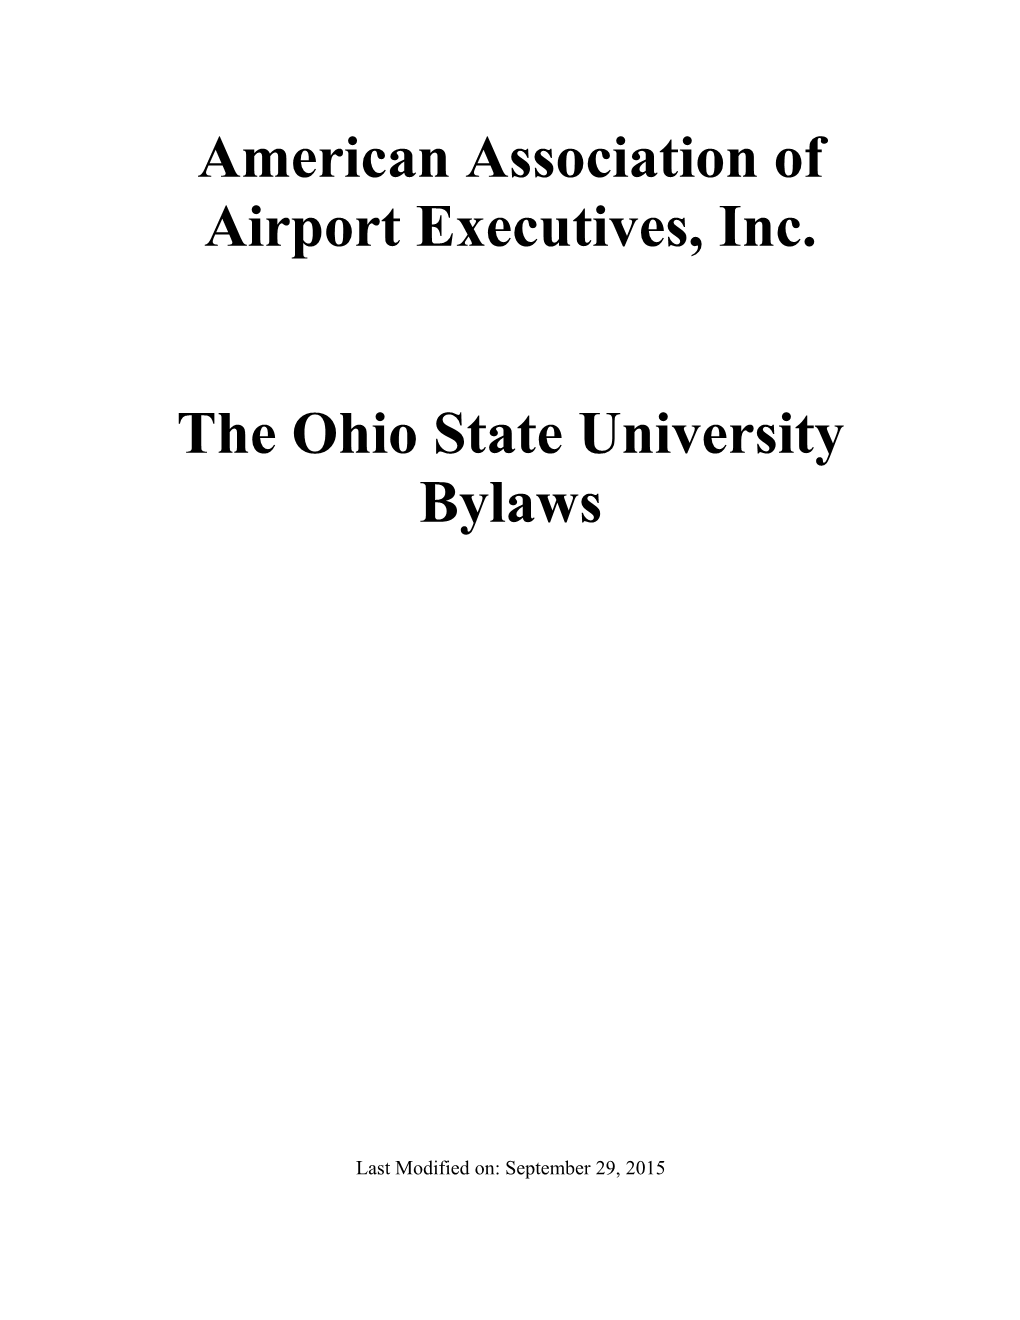 American Association of Airport Executives, Inc